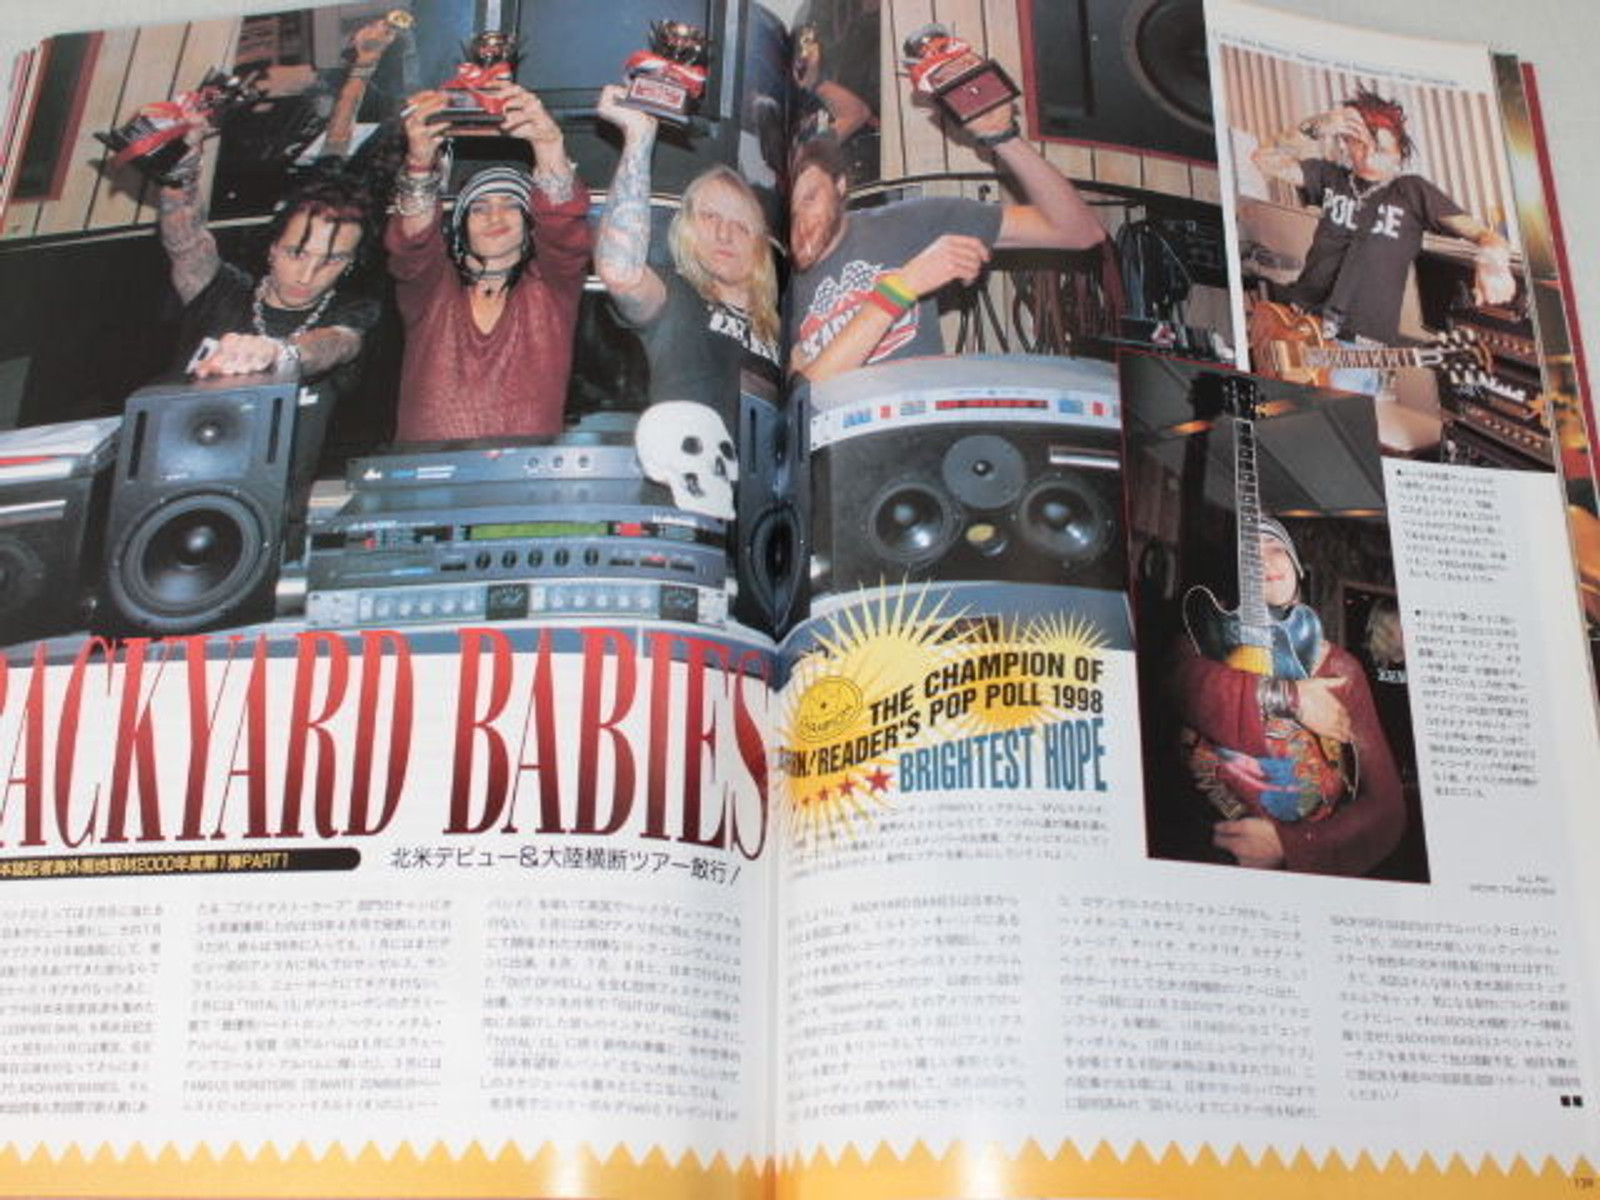 2000/01 BURRN! Japan Rock Magazine AEROSMITH/BUCKCHERRY/IZZY STRADLIN/MR.BIG